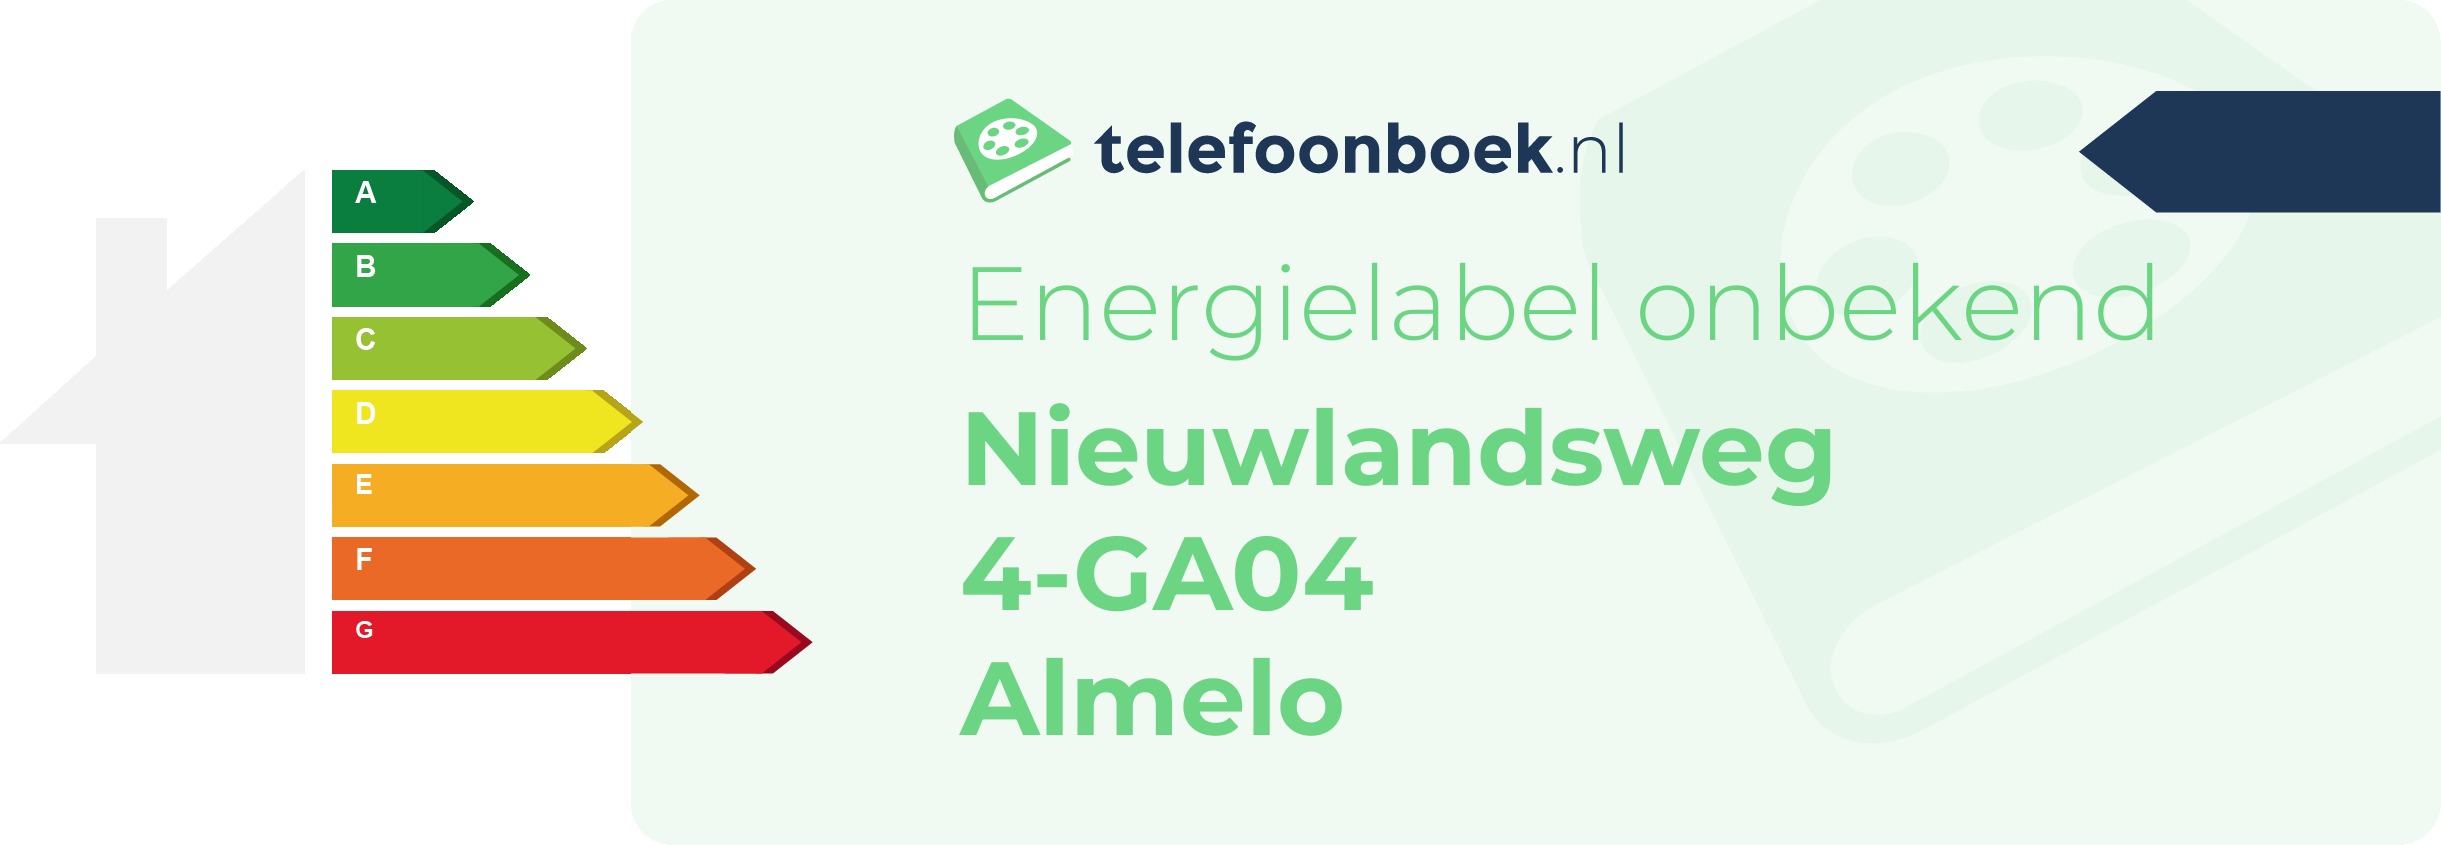 Energielabel Nieuwlandsweg 4-GA04 Almelo